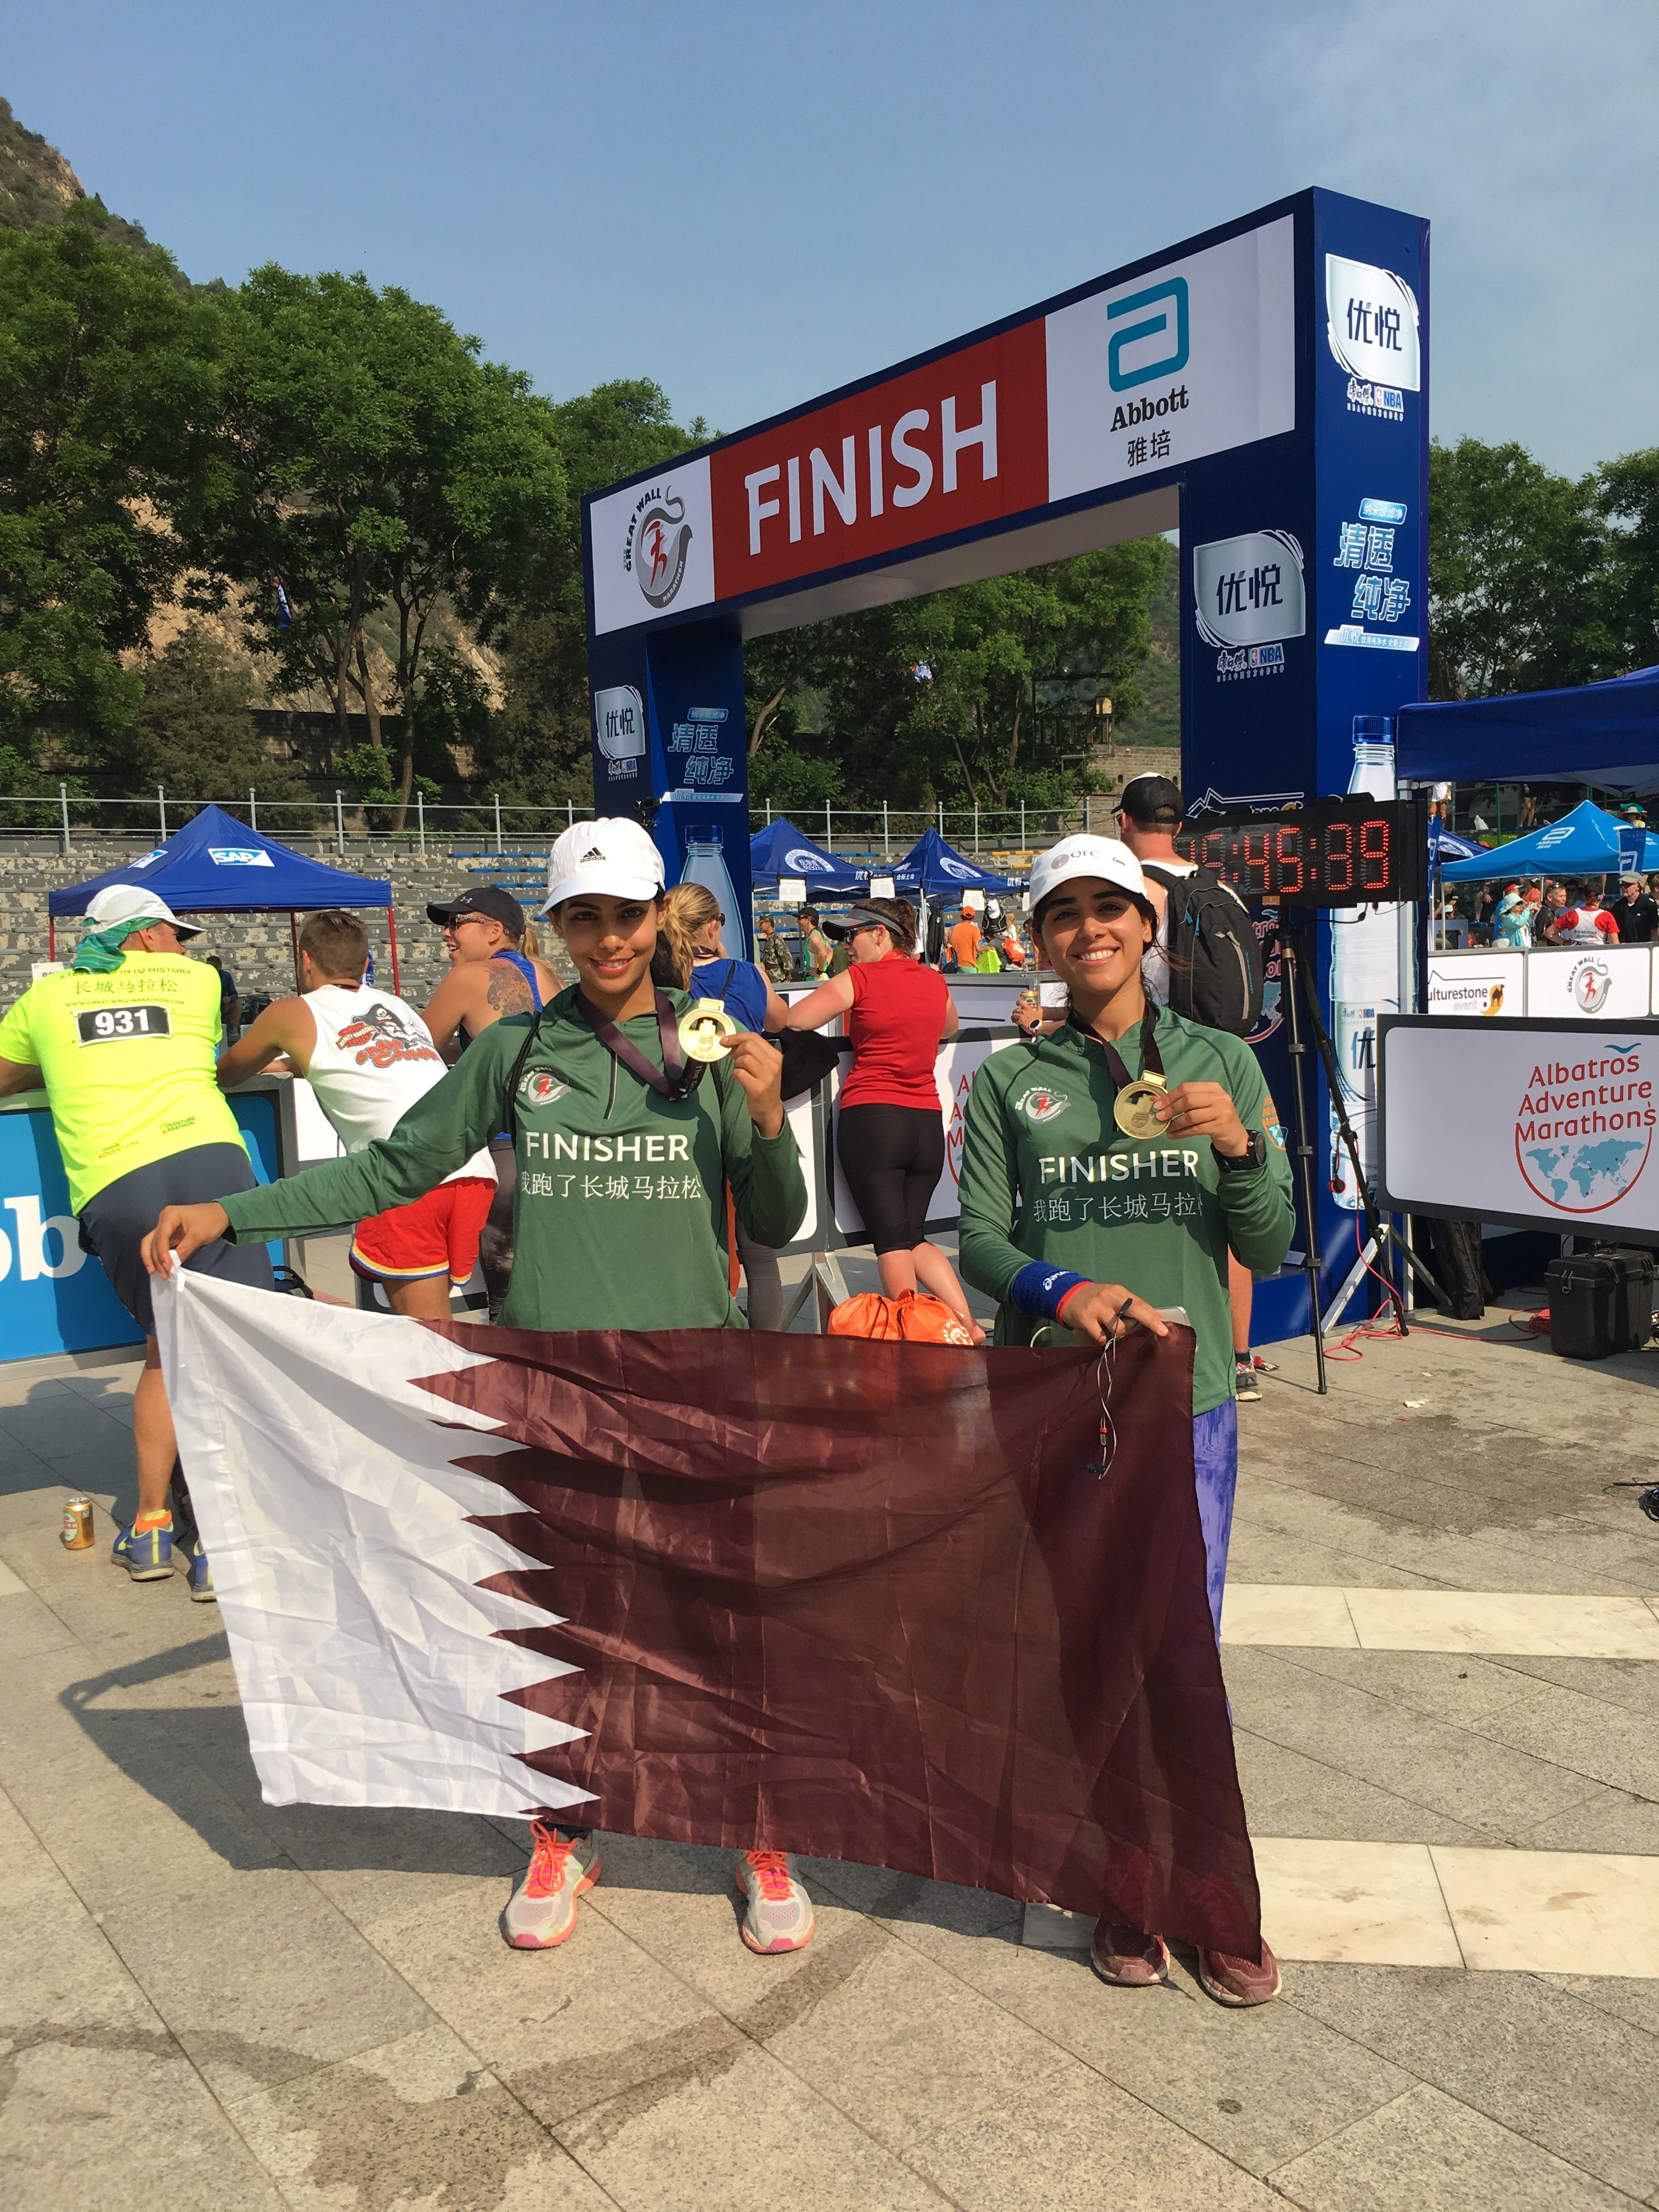 2 Qatari women in green sweatshirts hold a Qatari flag and gold medals at the finish line of a marathon.